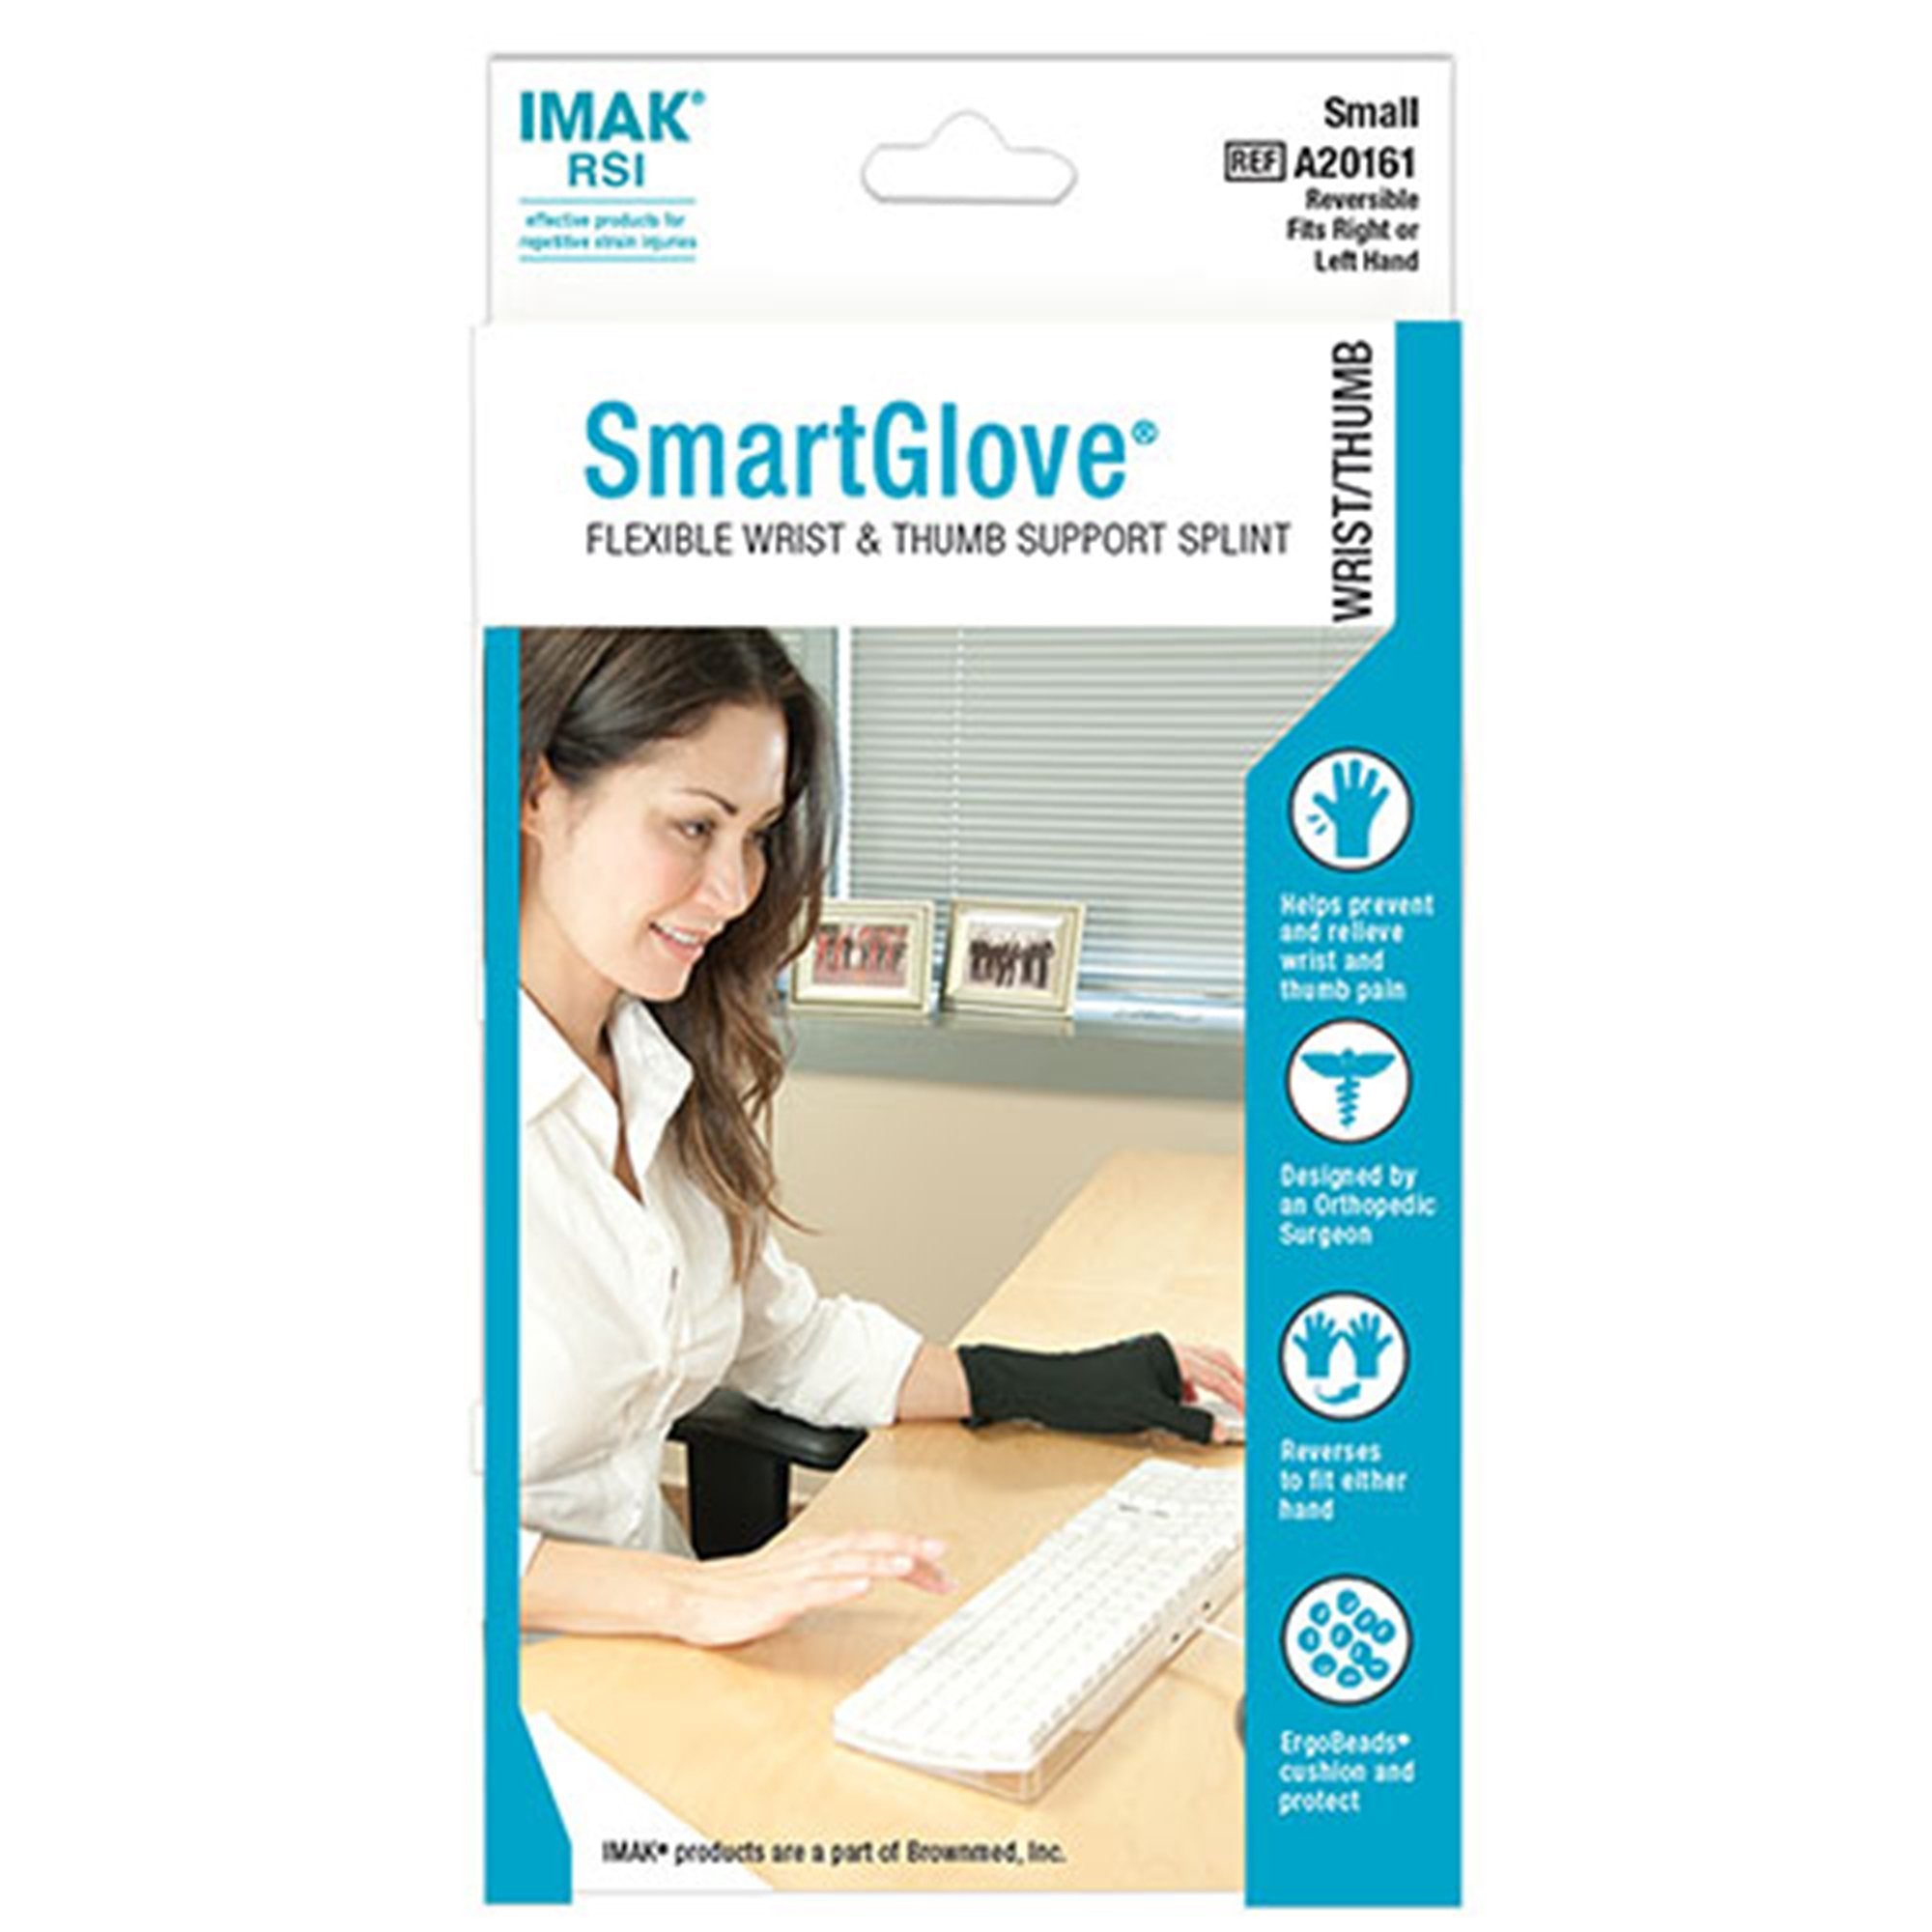 Support Gloves with Thumb Extension IMAK® RSI SmartGlove Fingerless Medium Over-the-Wrist Length Ambidextrous Cotton / Lycra®